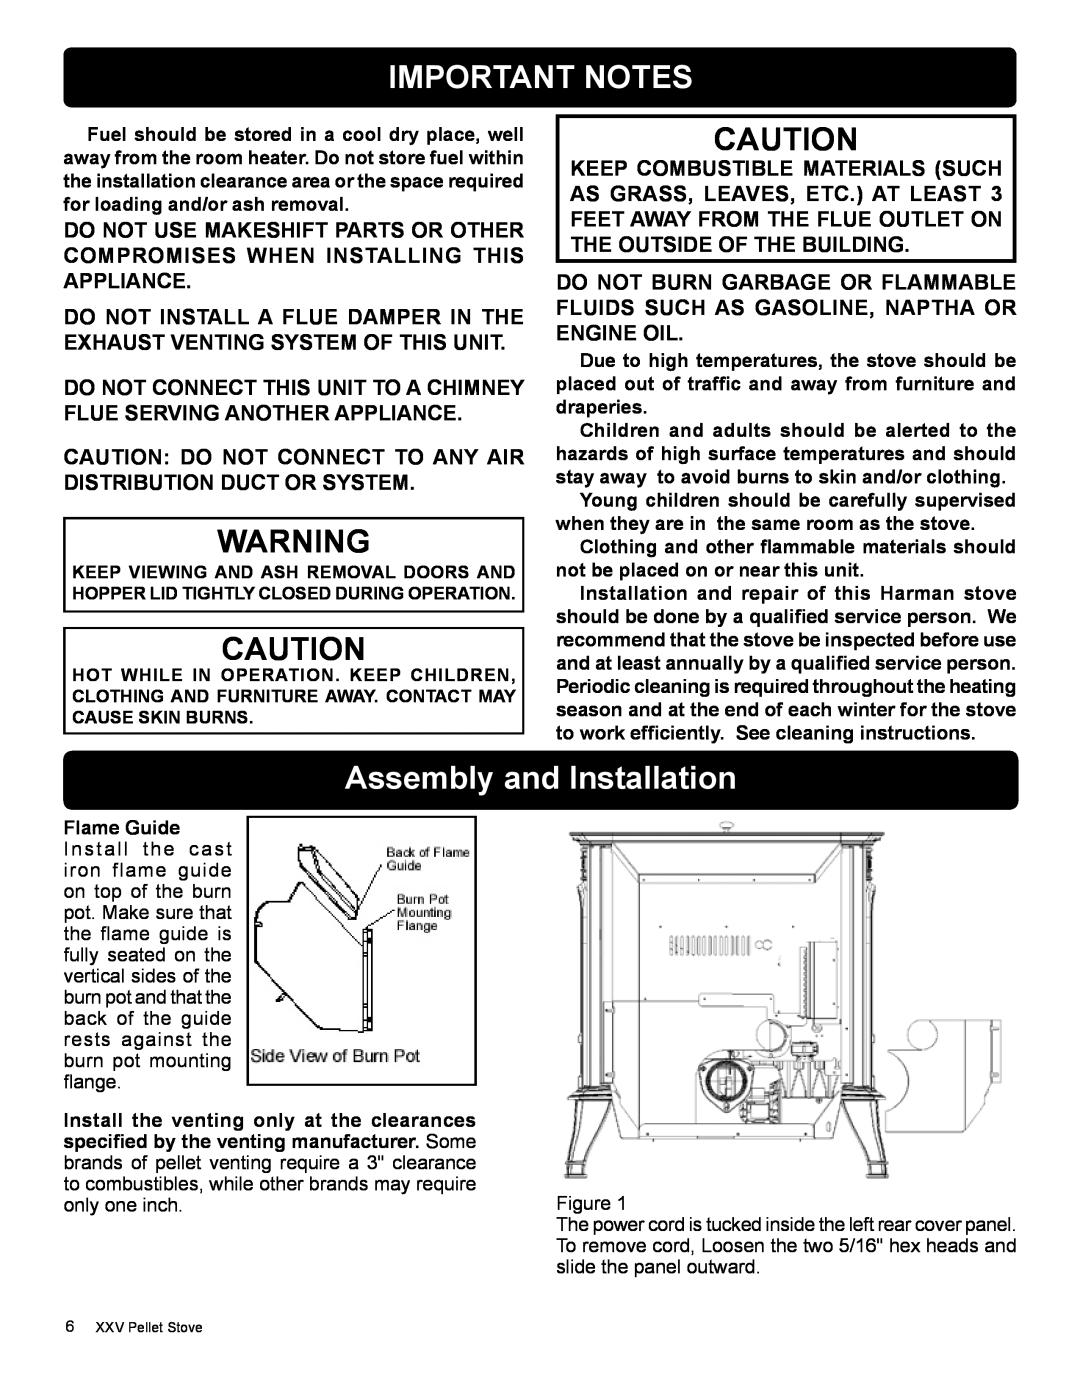 Harman Stove Company R16 manual Important Notes, Assembly and Installation 